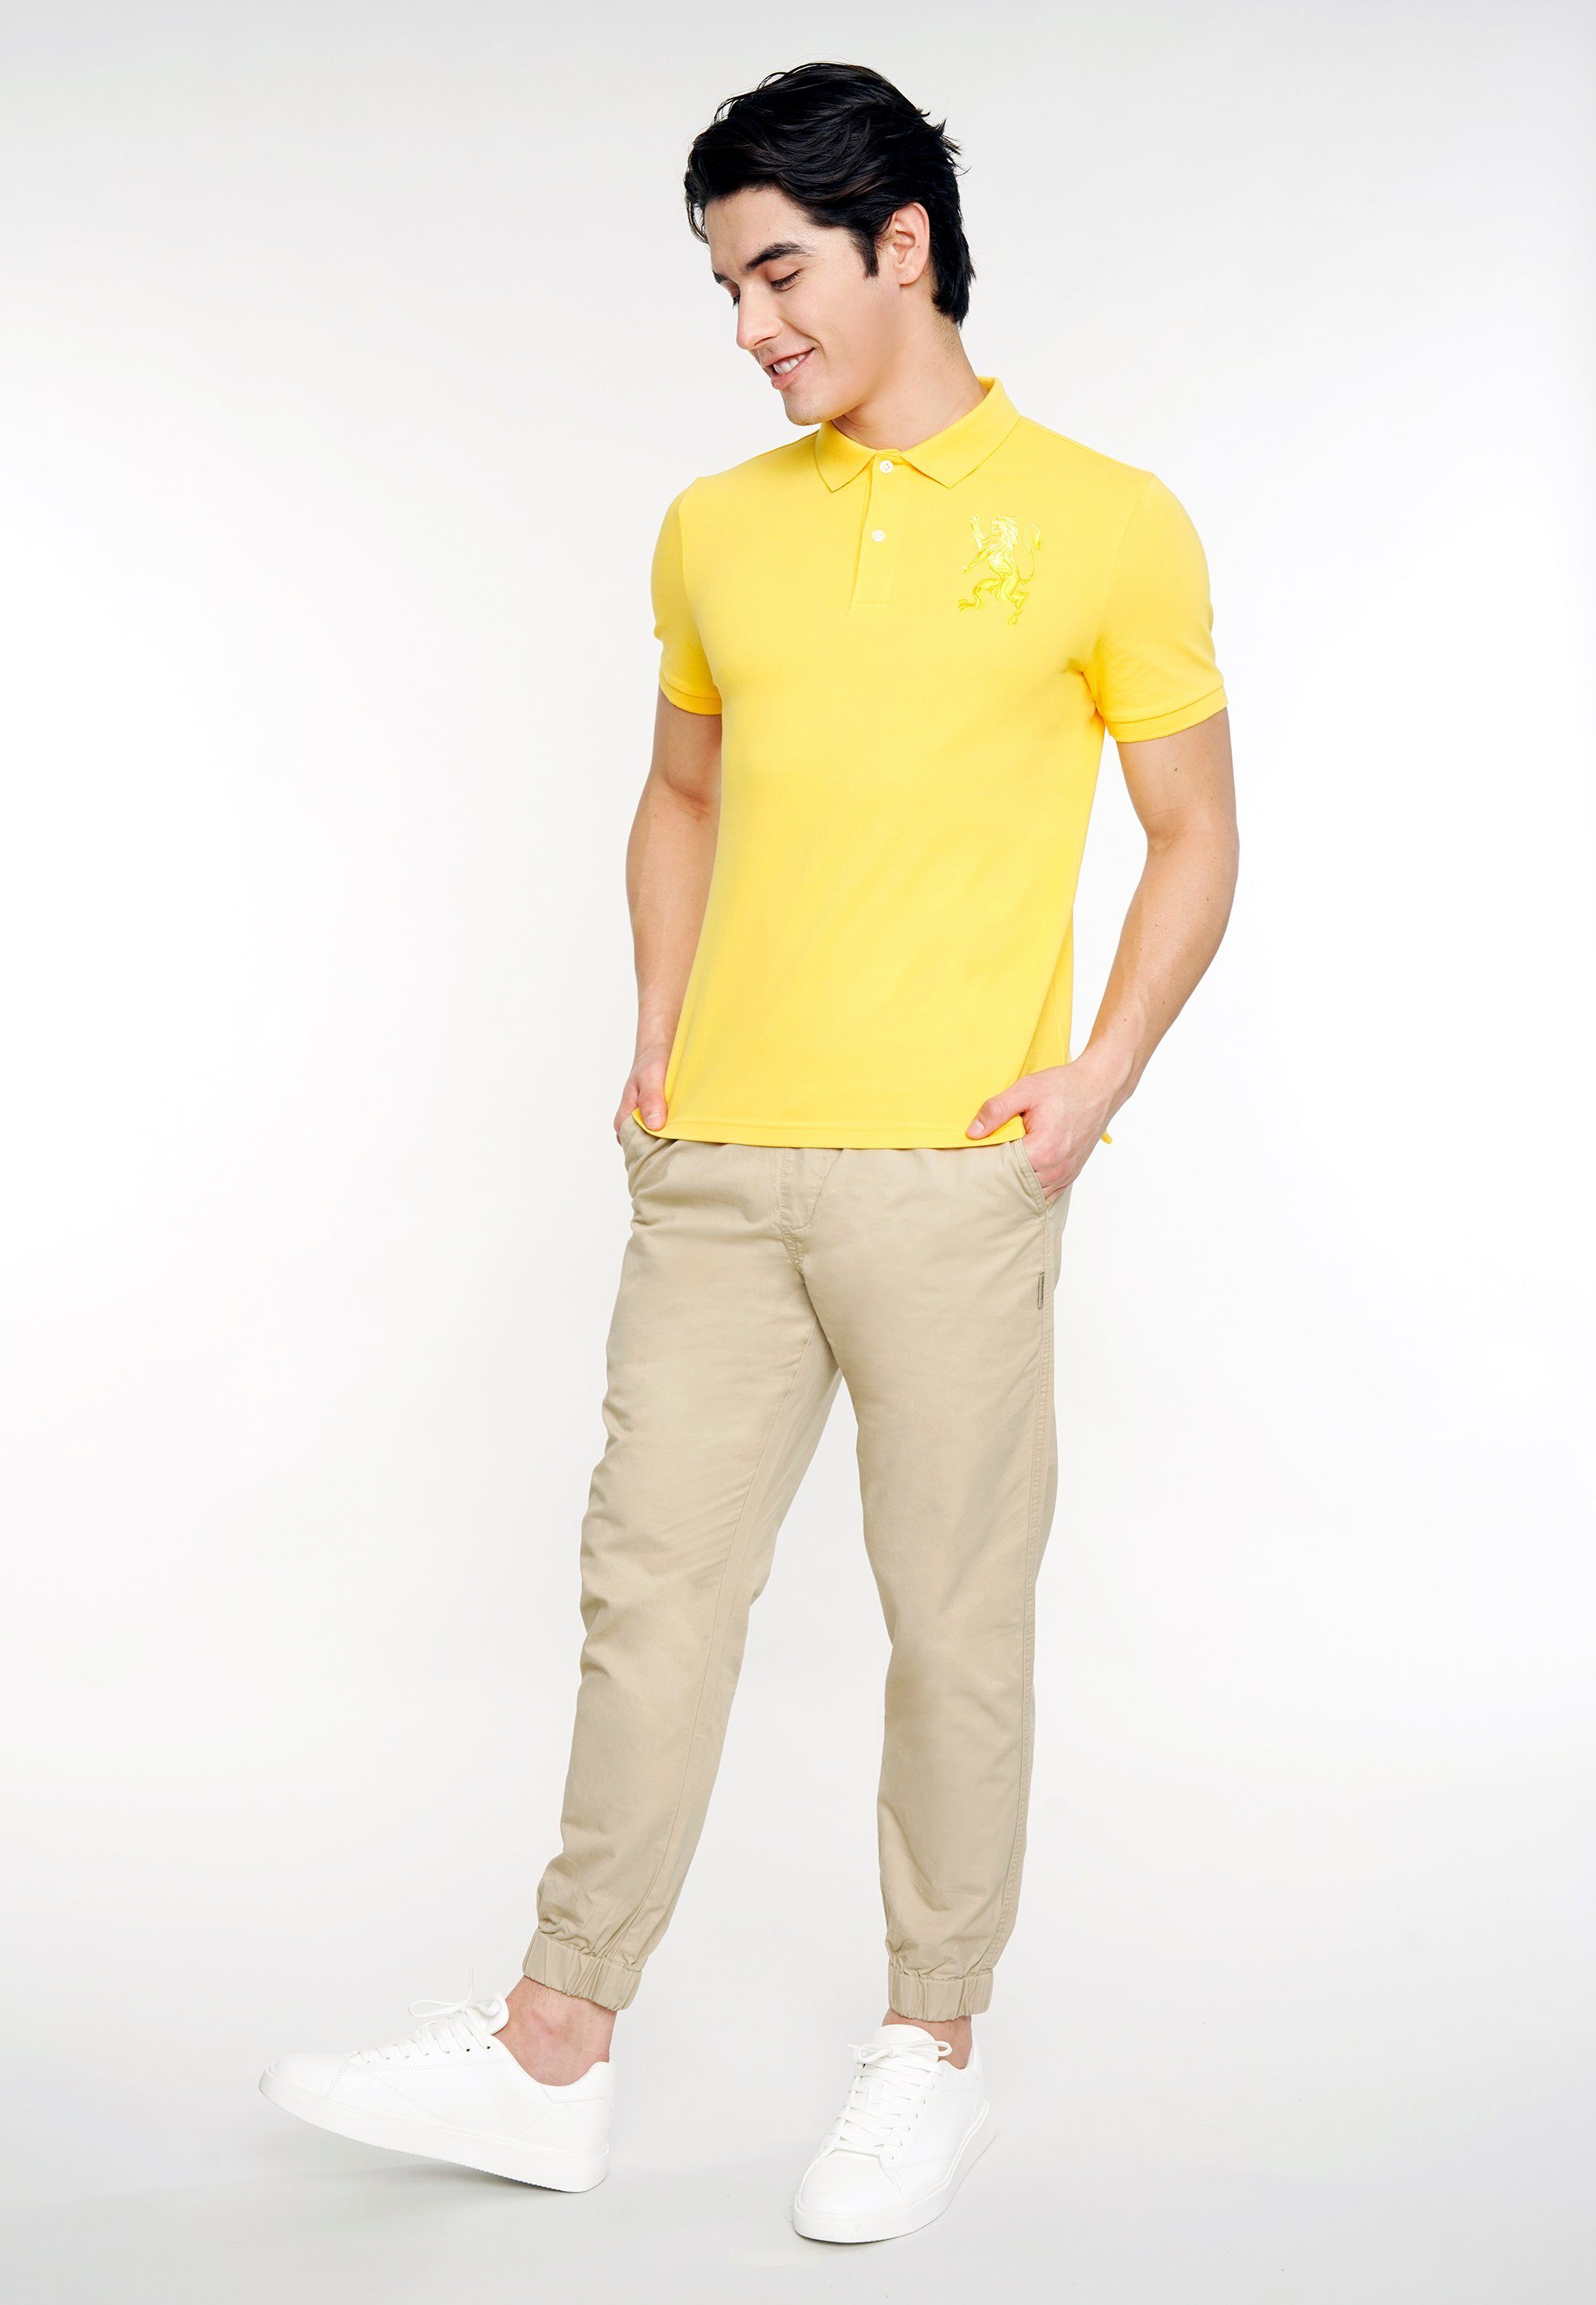 GIORDANO Poloshirt 3D Stickerei Lion mit toller gelb